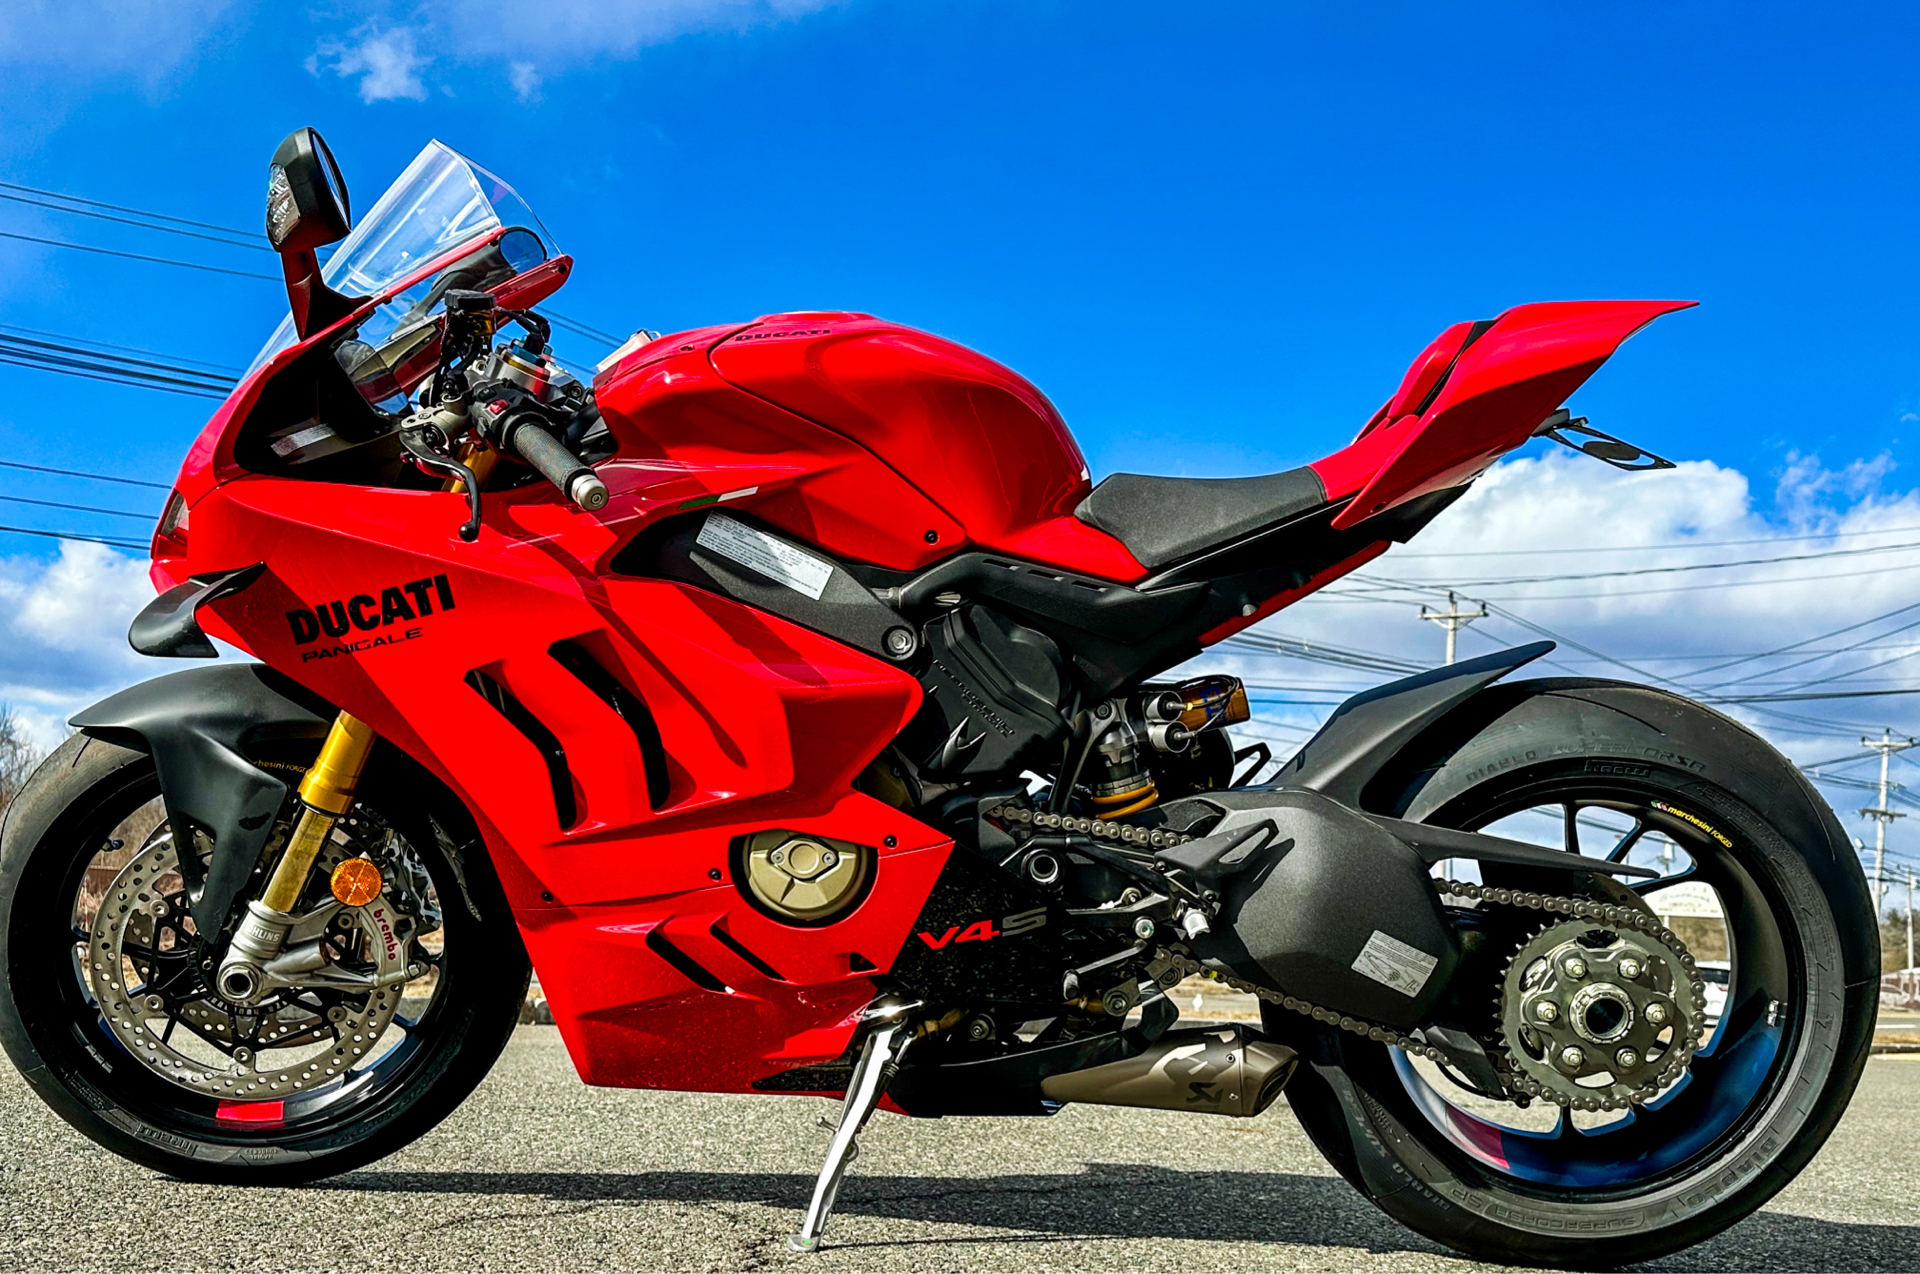 2023 Ducati Panigale V4 S in Foxboro, Massachusetts - Photo 24